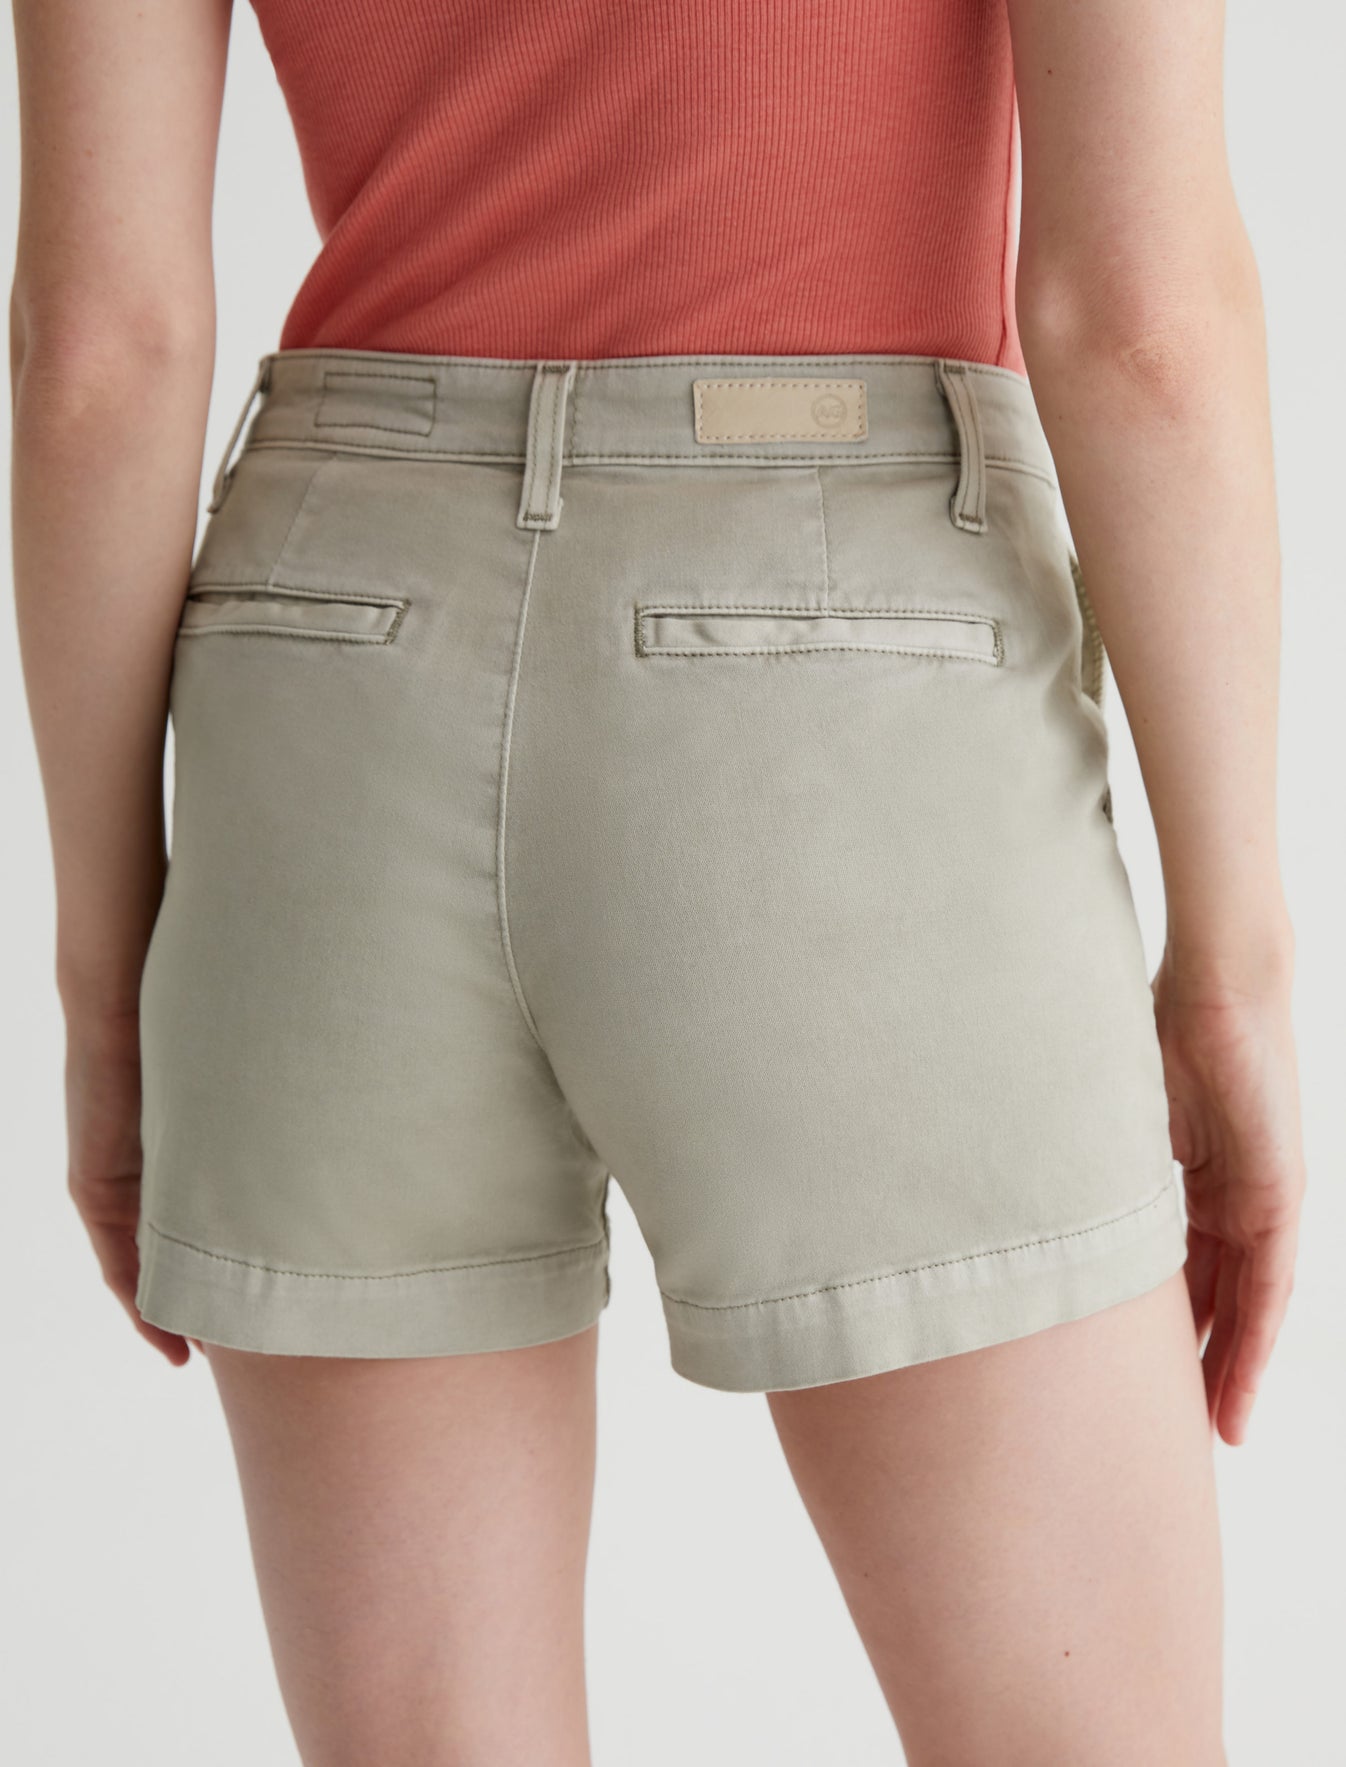 Caden Short Sulfur Dried Parsley Tailored Trouser Short Women Bottom Photo 6